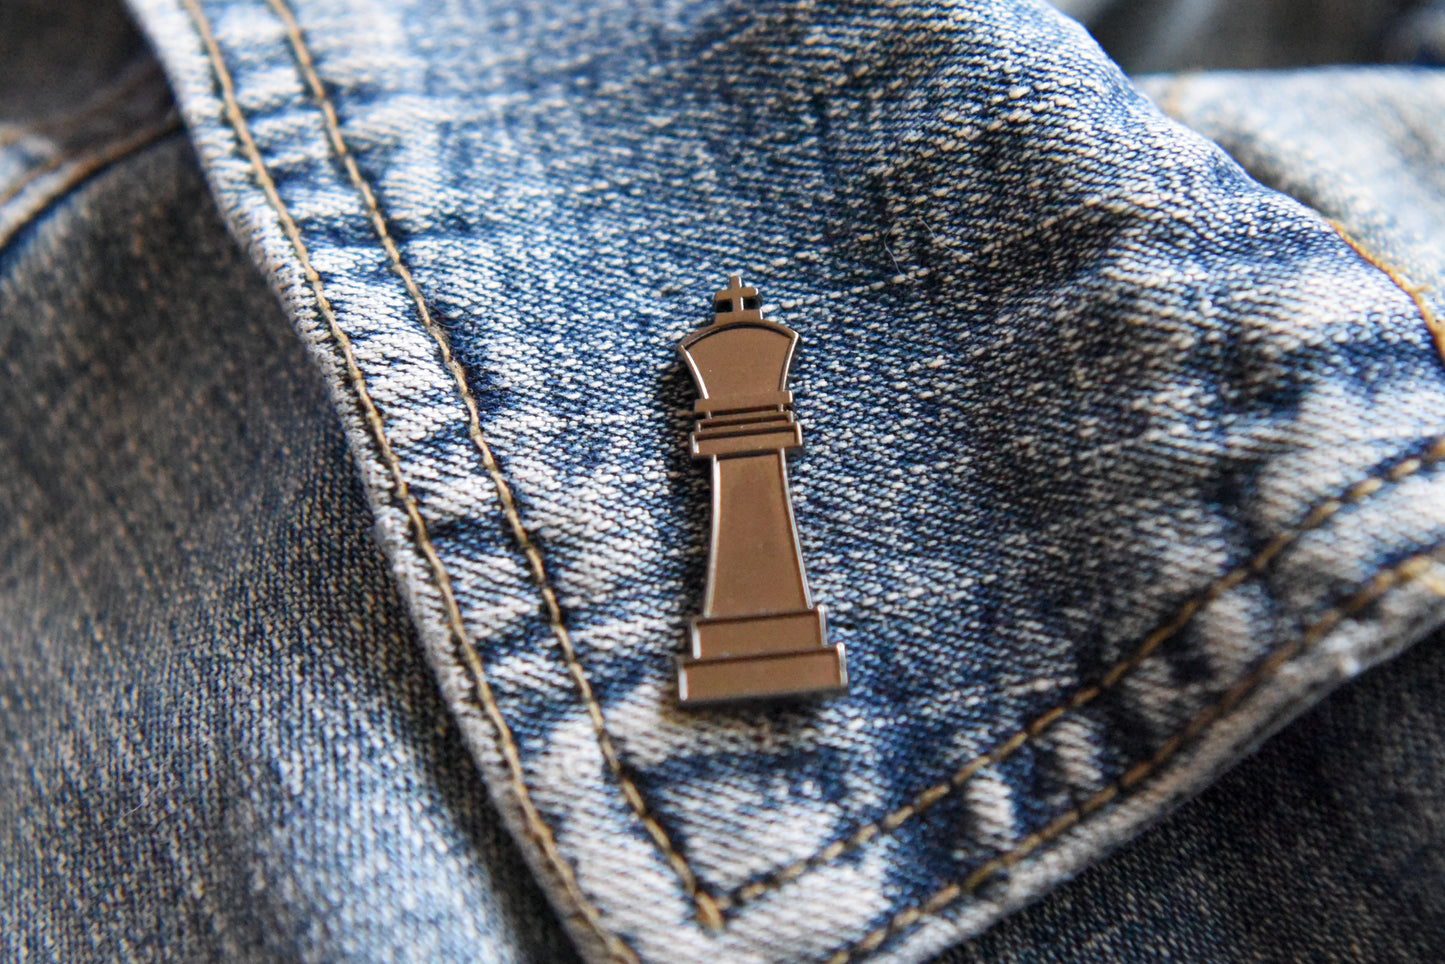 King Chess Piece Pin